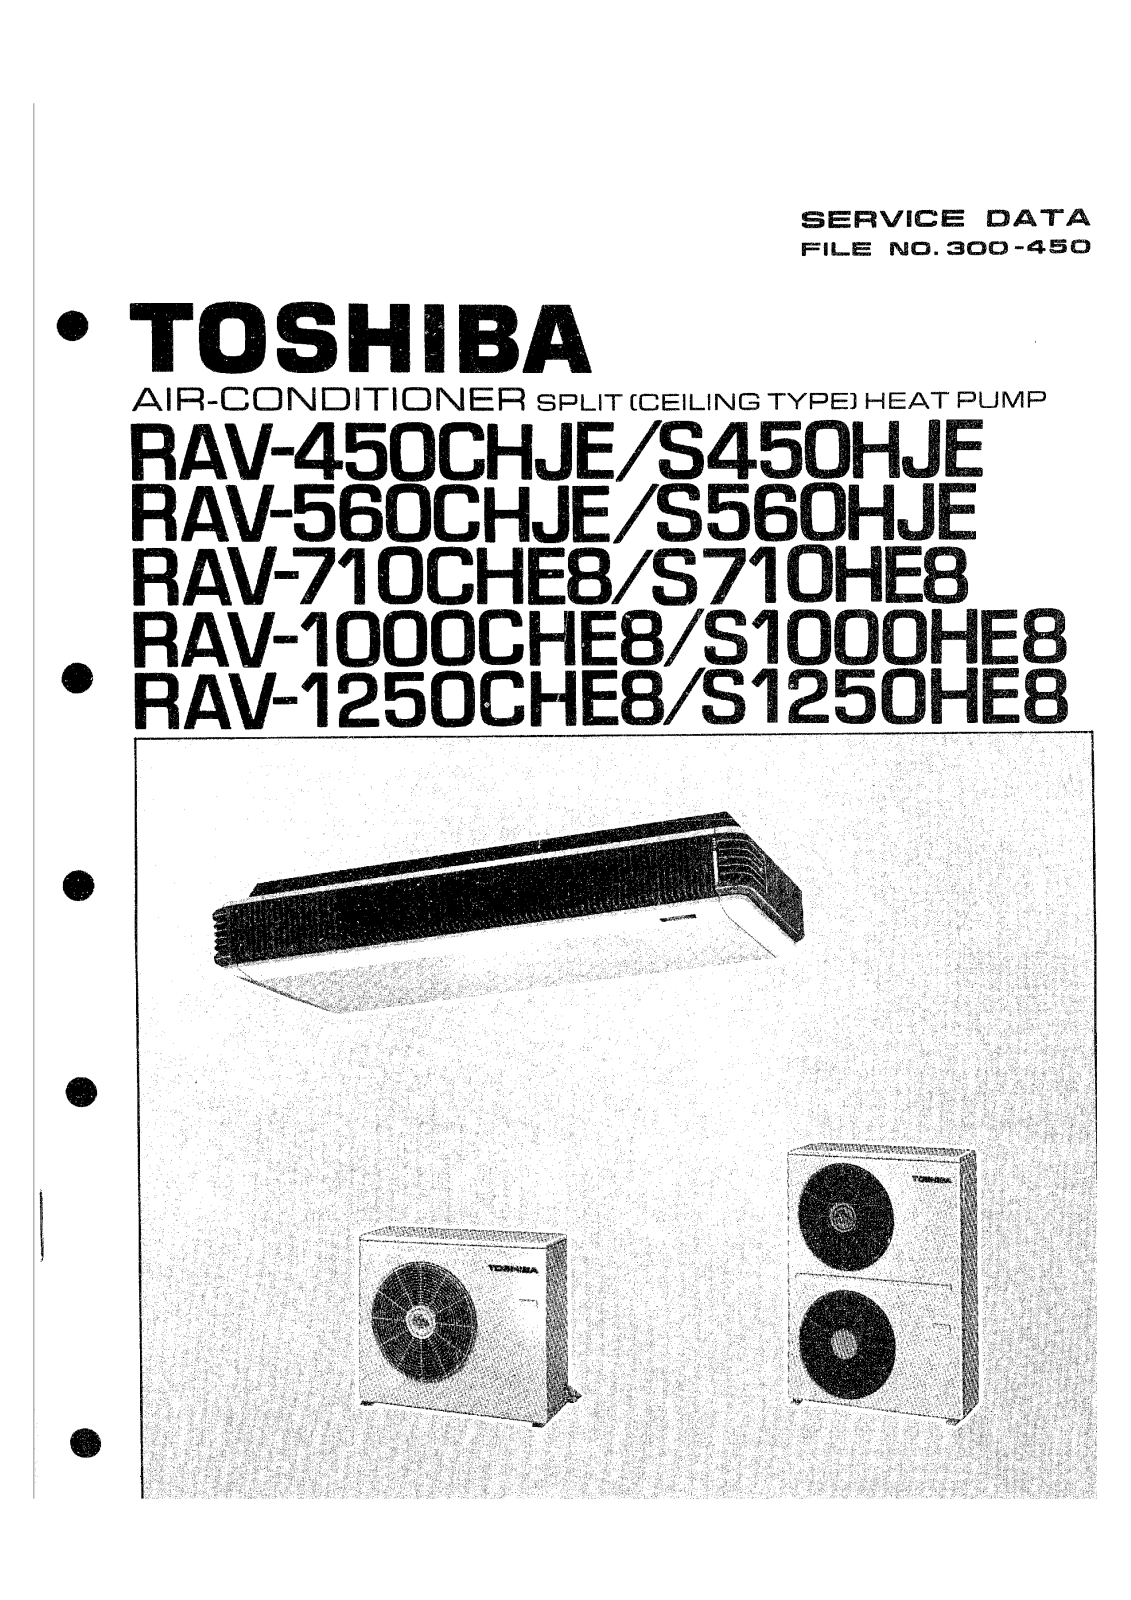 Toshiba RAV-450CHJE, RAV-1250CHJE, RAV-710CHJE, RAV-560CHJE, RAV-1000CHJE SERVICE MANUAL